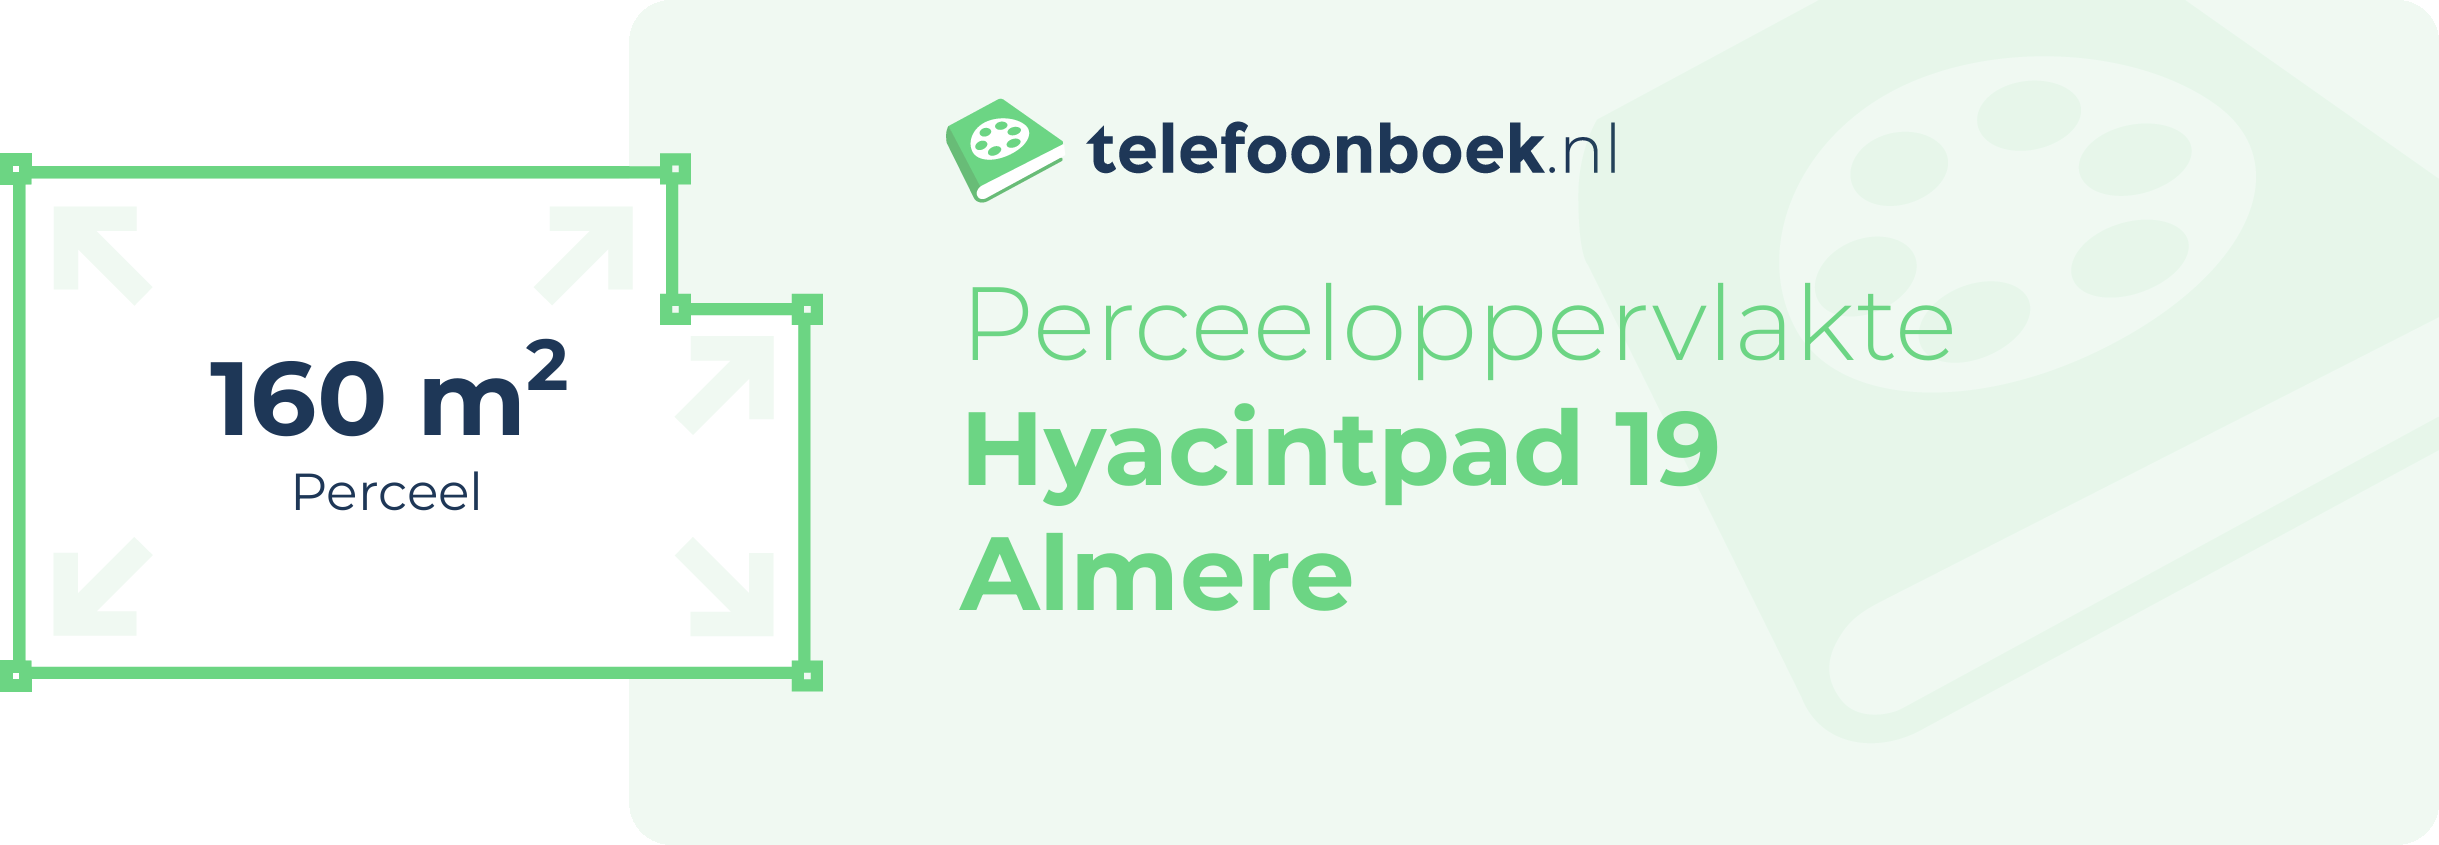 Perceeloppervlakte Hyacintpad 19 Almere